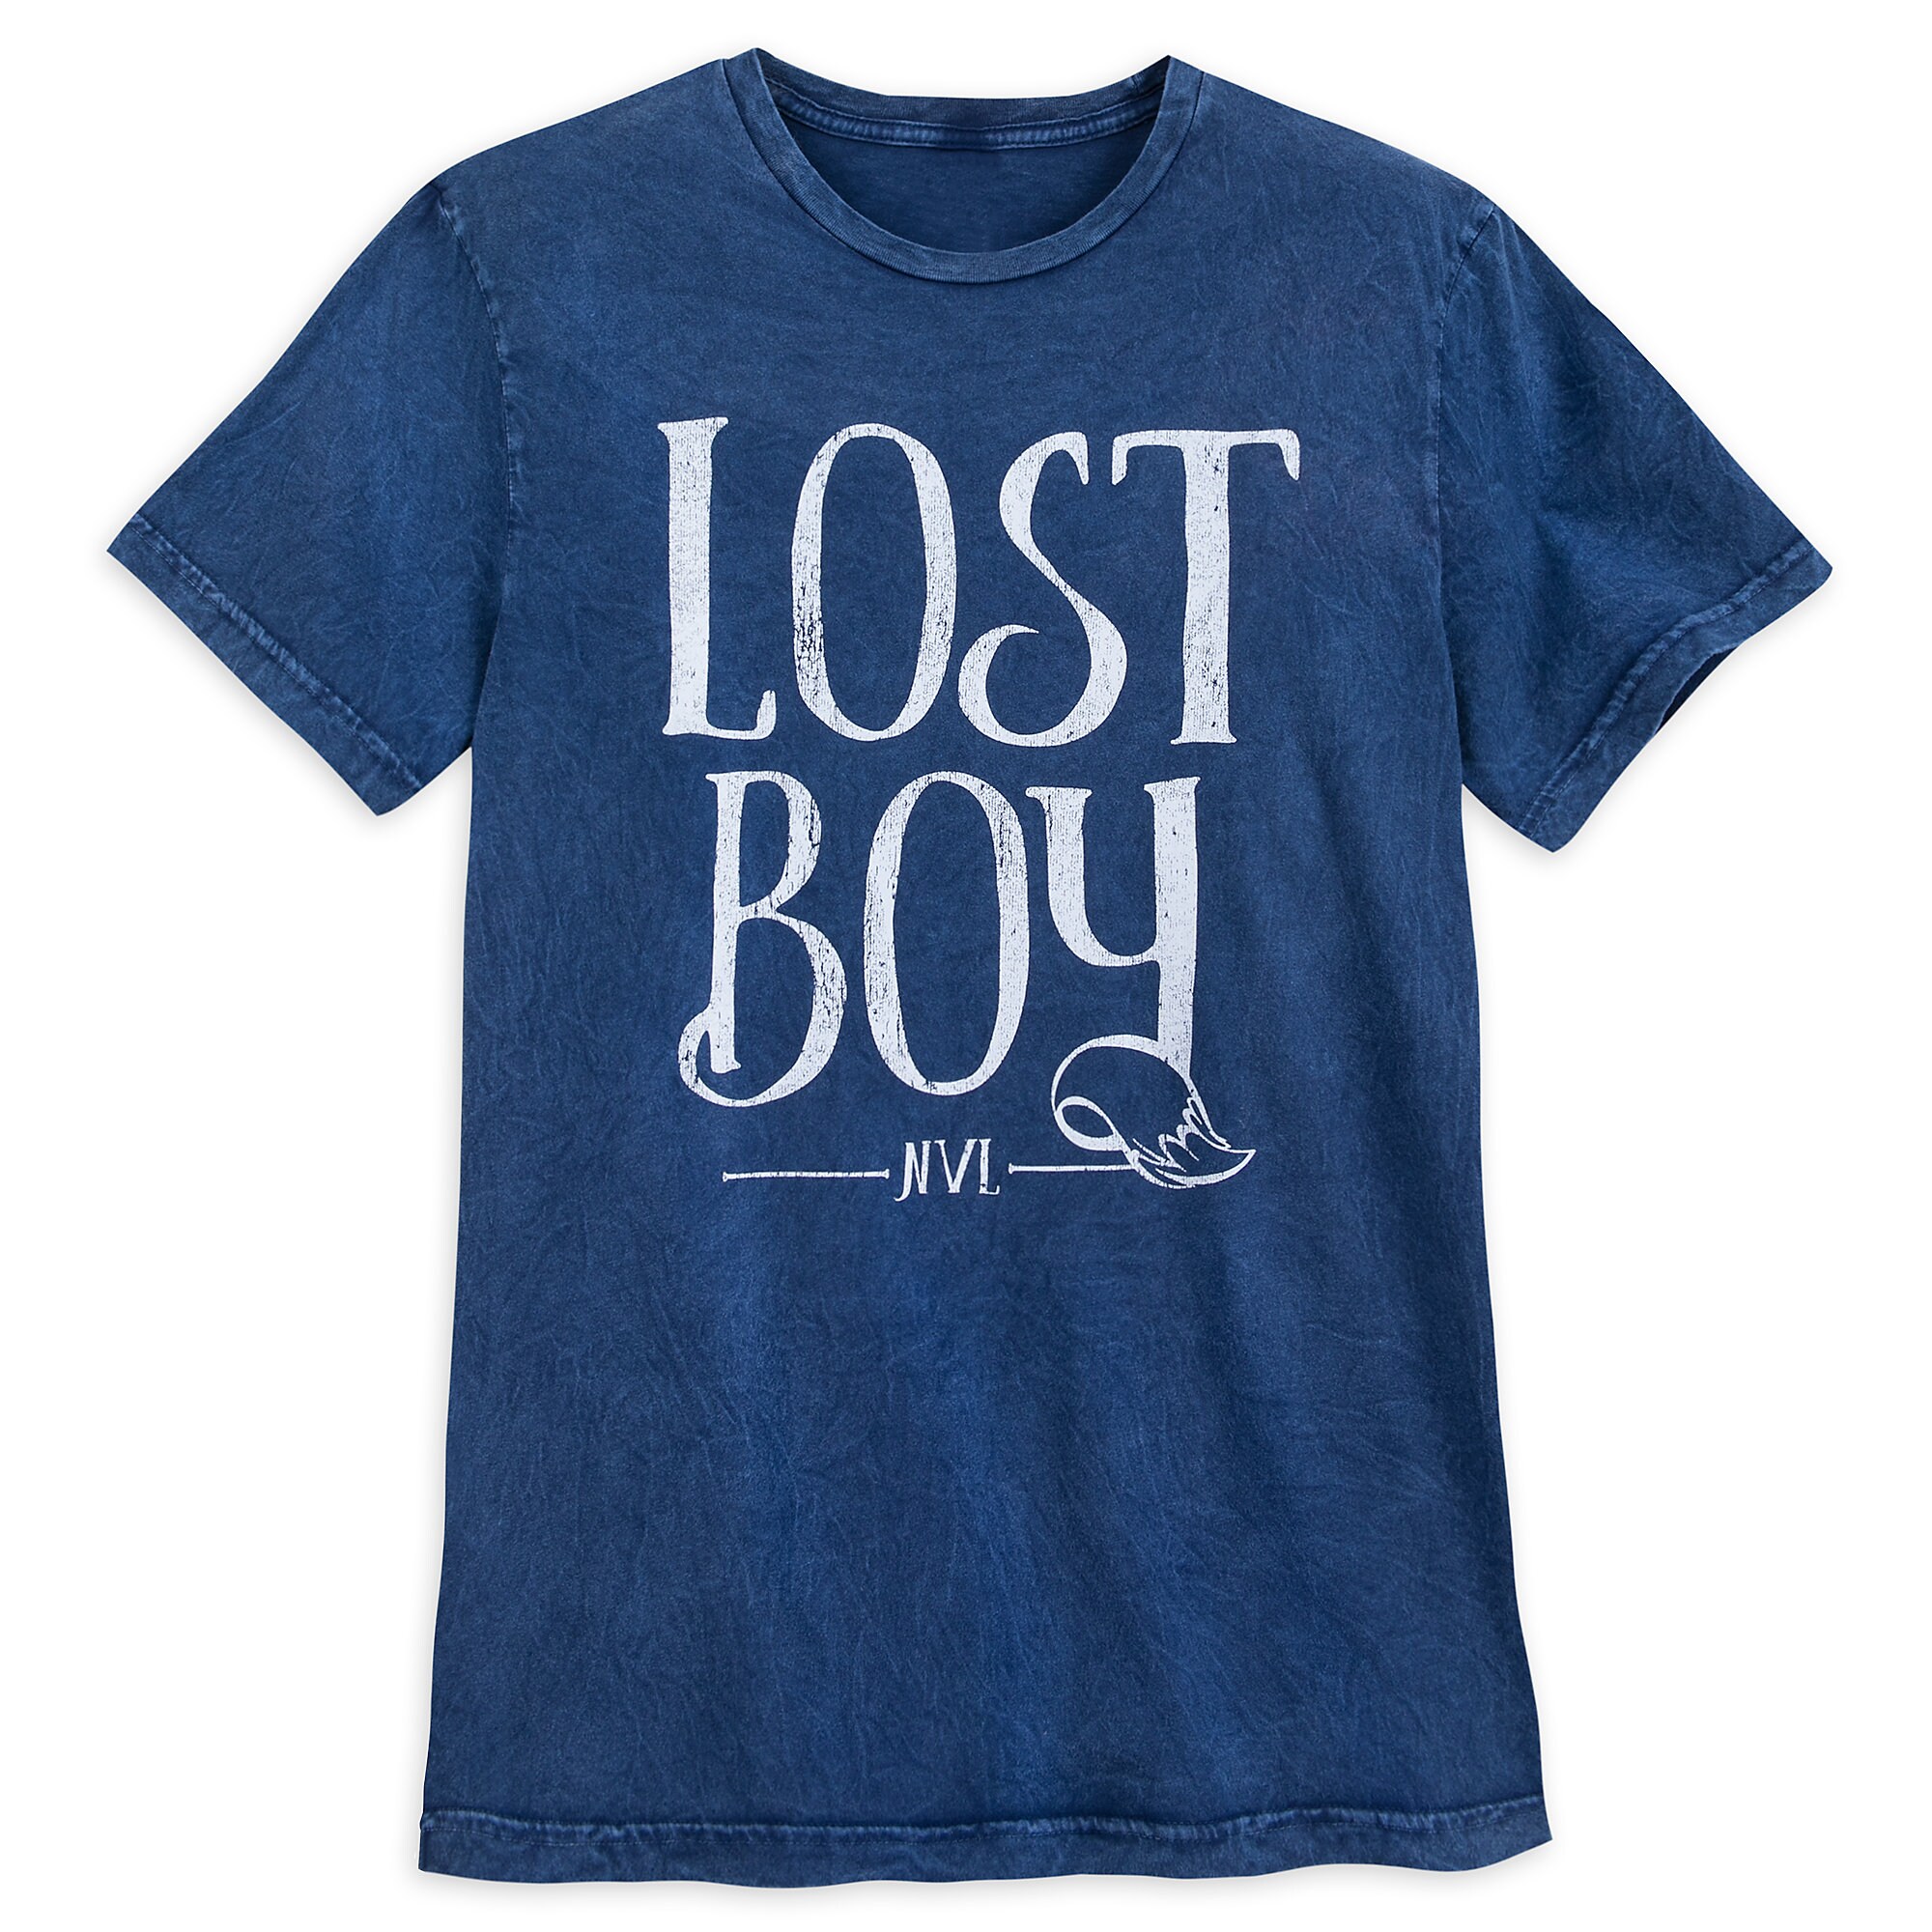 Lost Boy T-Shirt for Men - Peter Pan